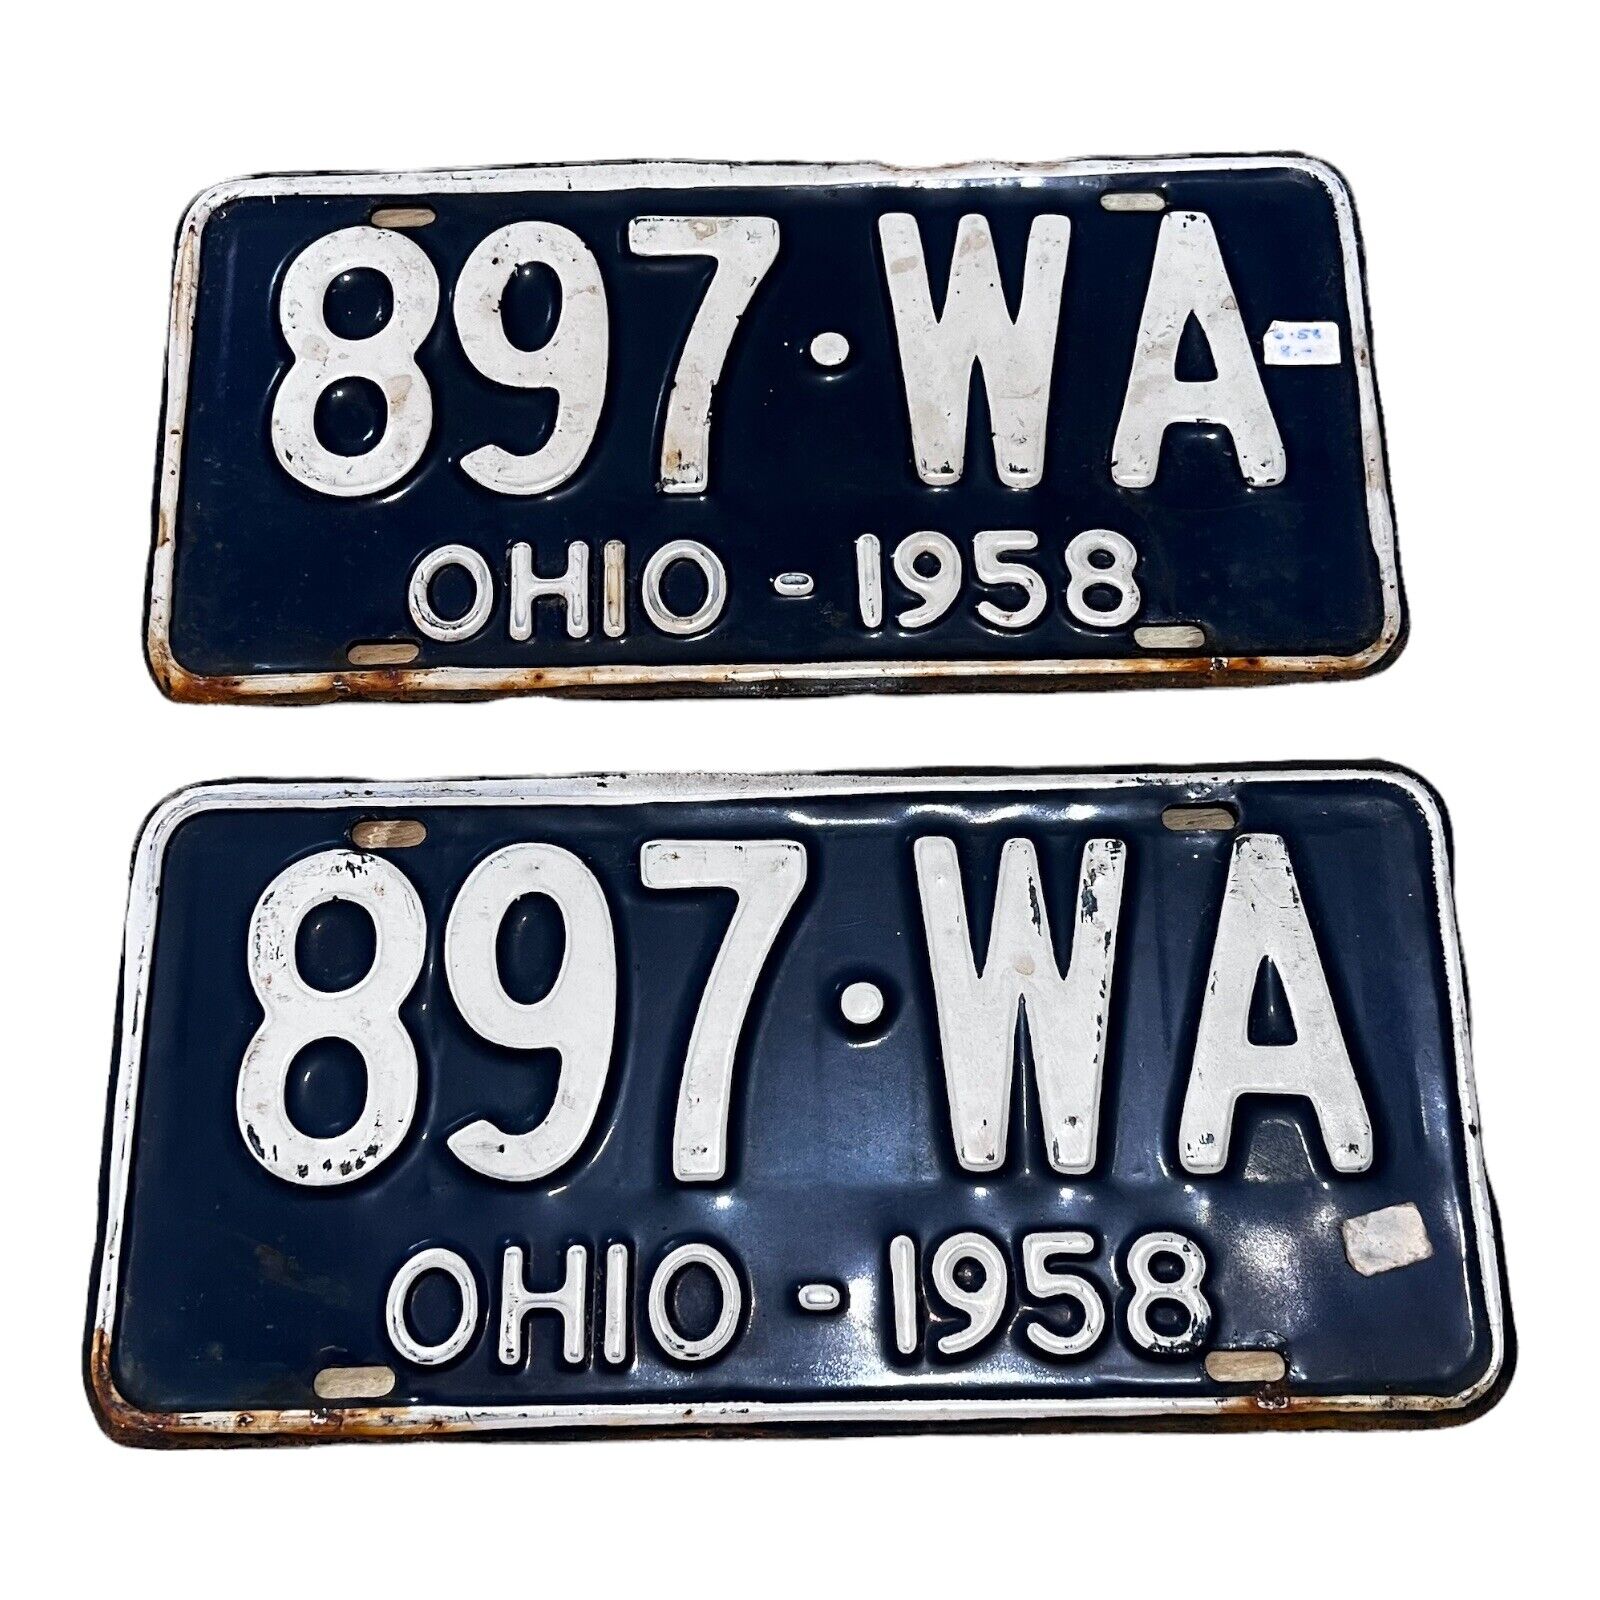 Vintage 1958 Ohio Collectible license plates pair Original Tag 897 WA 